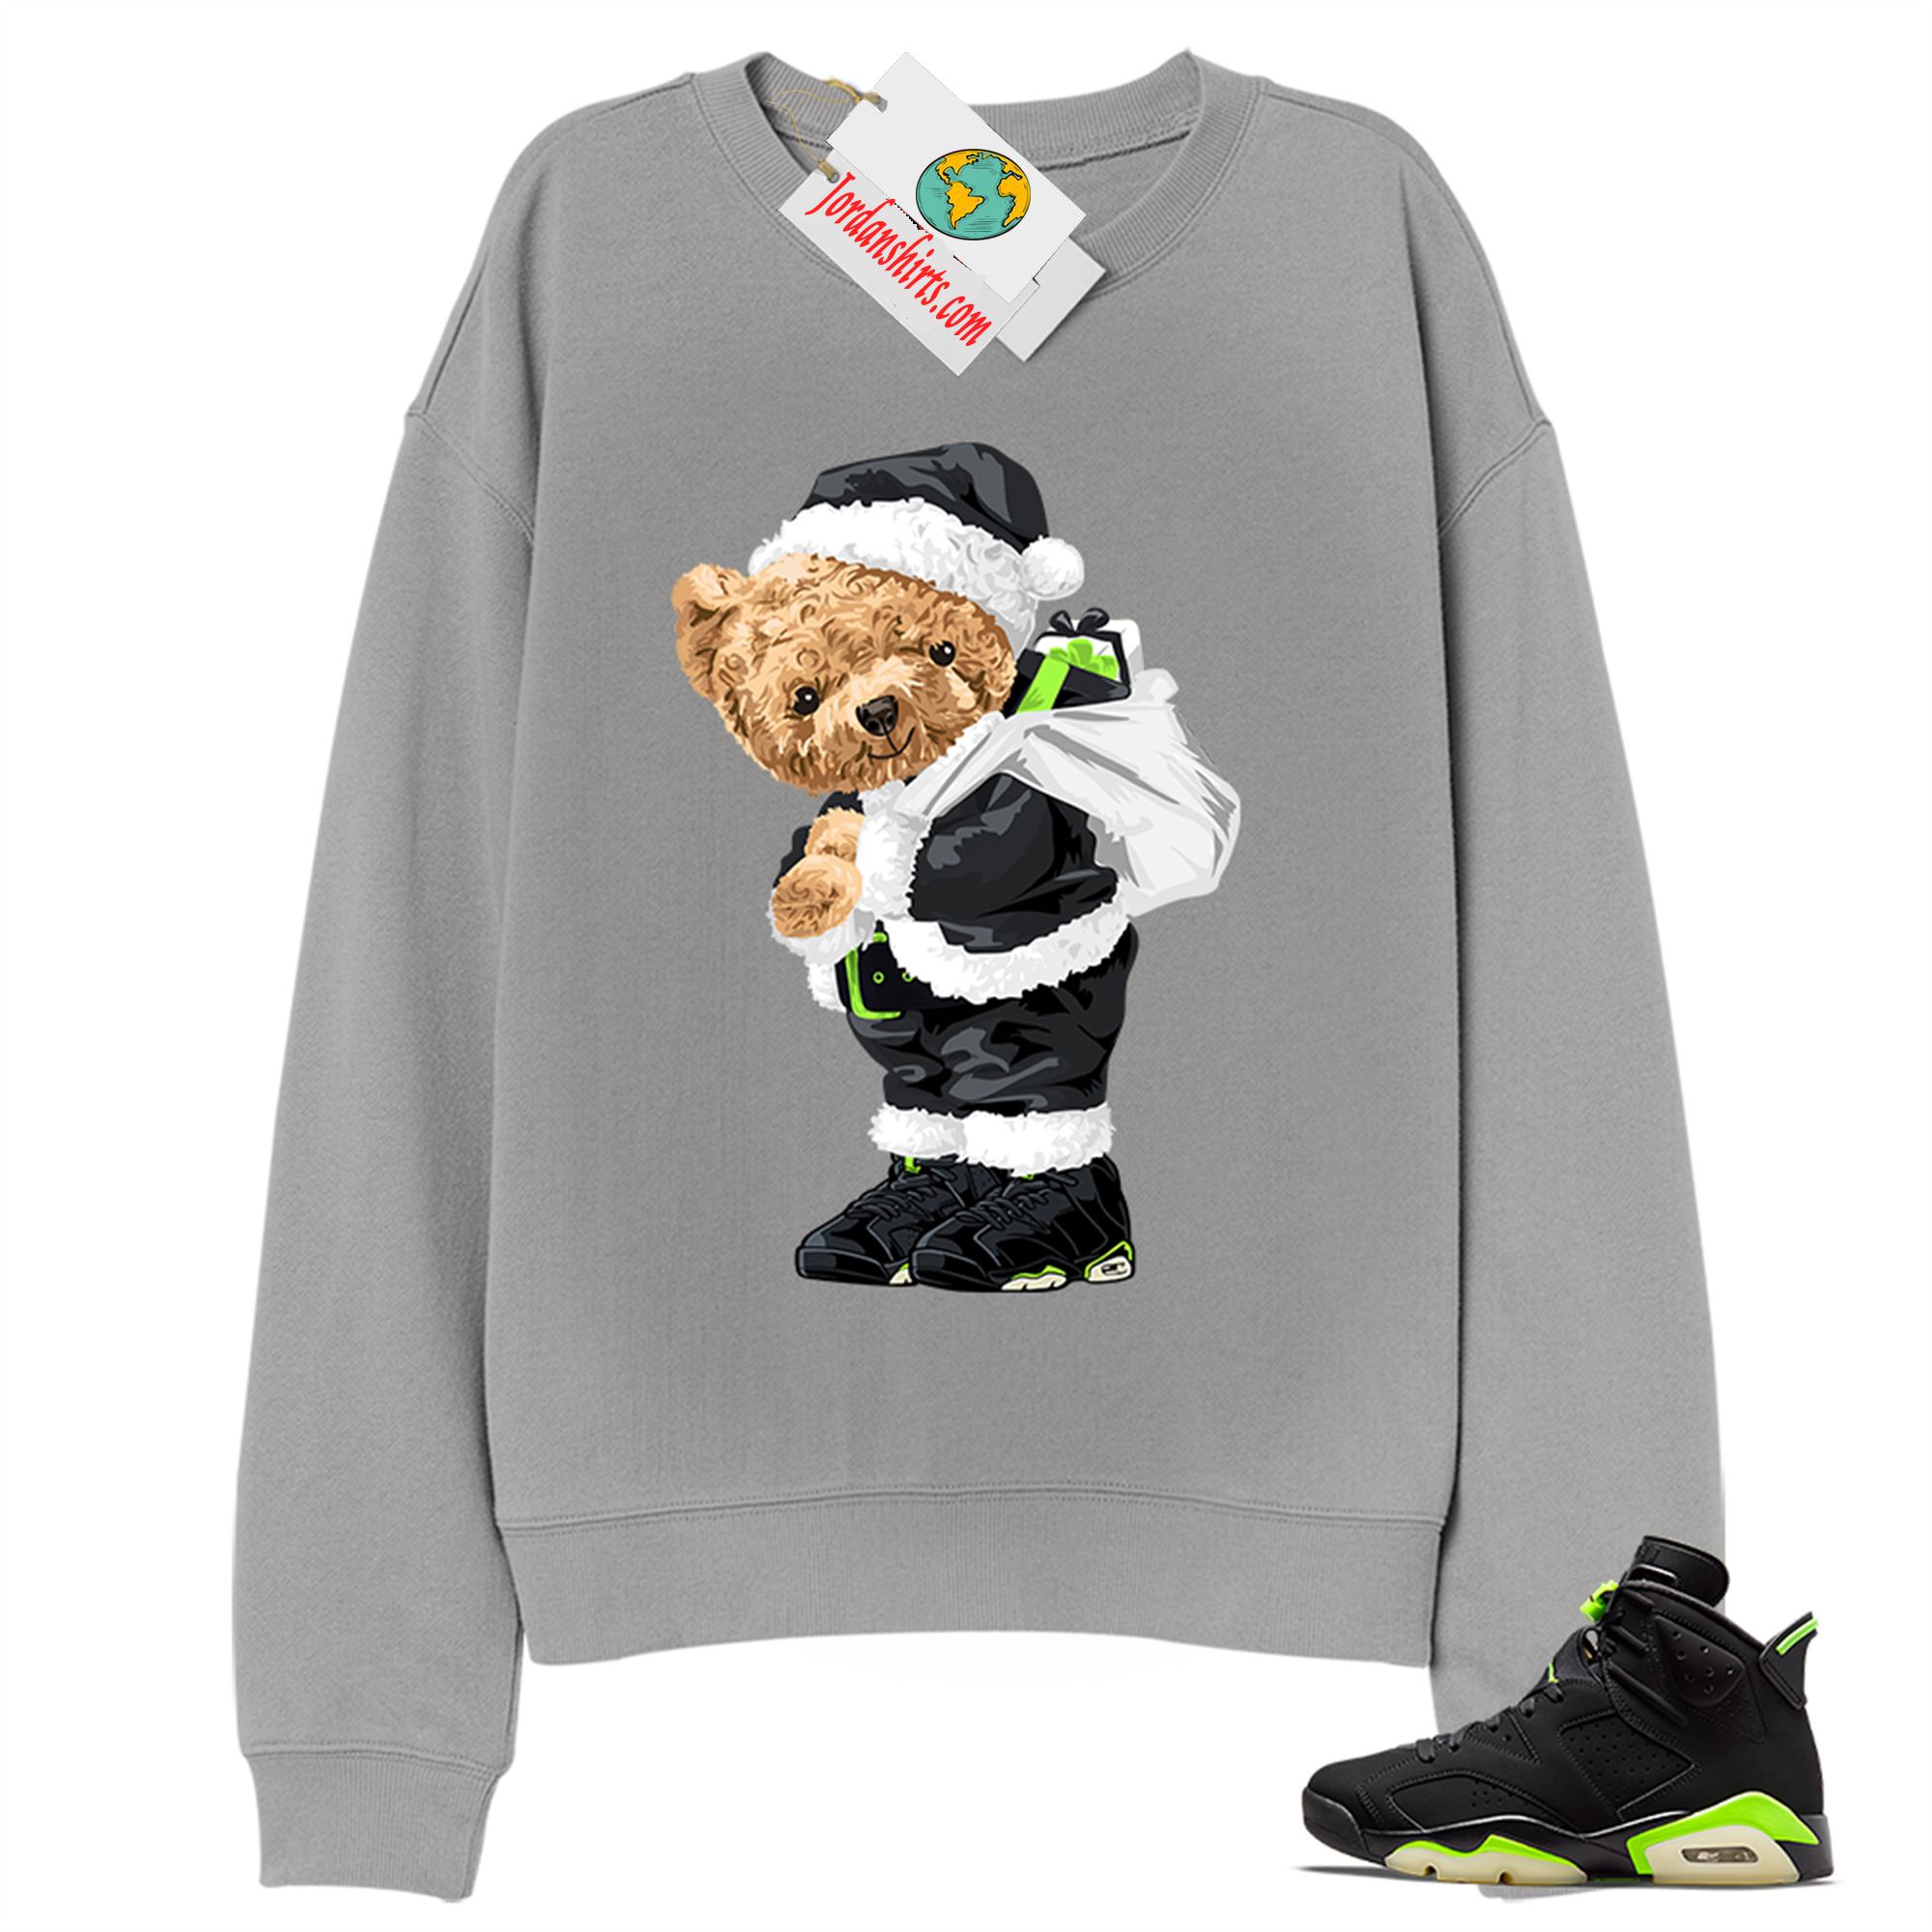 Jordan 6 Sweatshirt, Teddy Bear In Santa Claus Grey Sweatshirt Air Jordan 6 Electric Green 6s Plus Size Up To 5xl